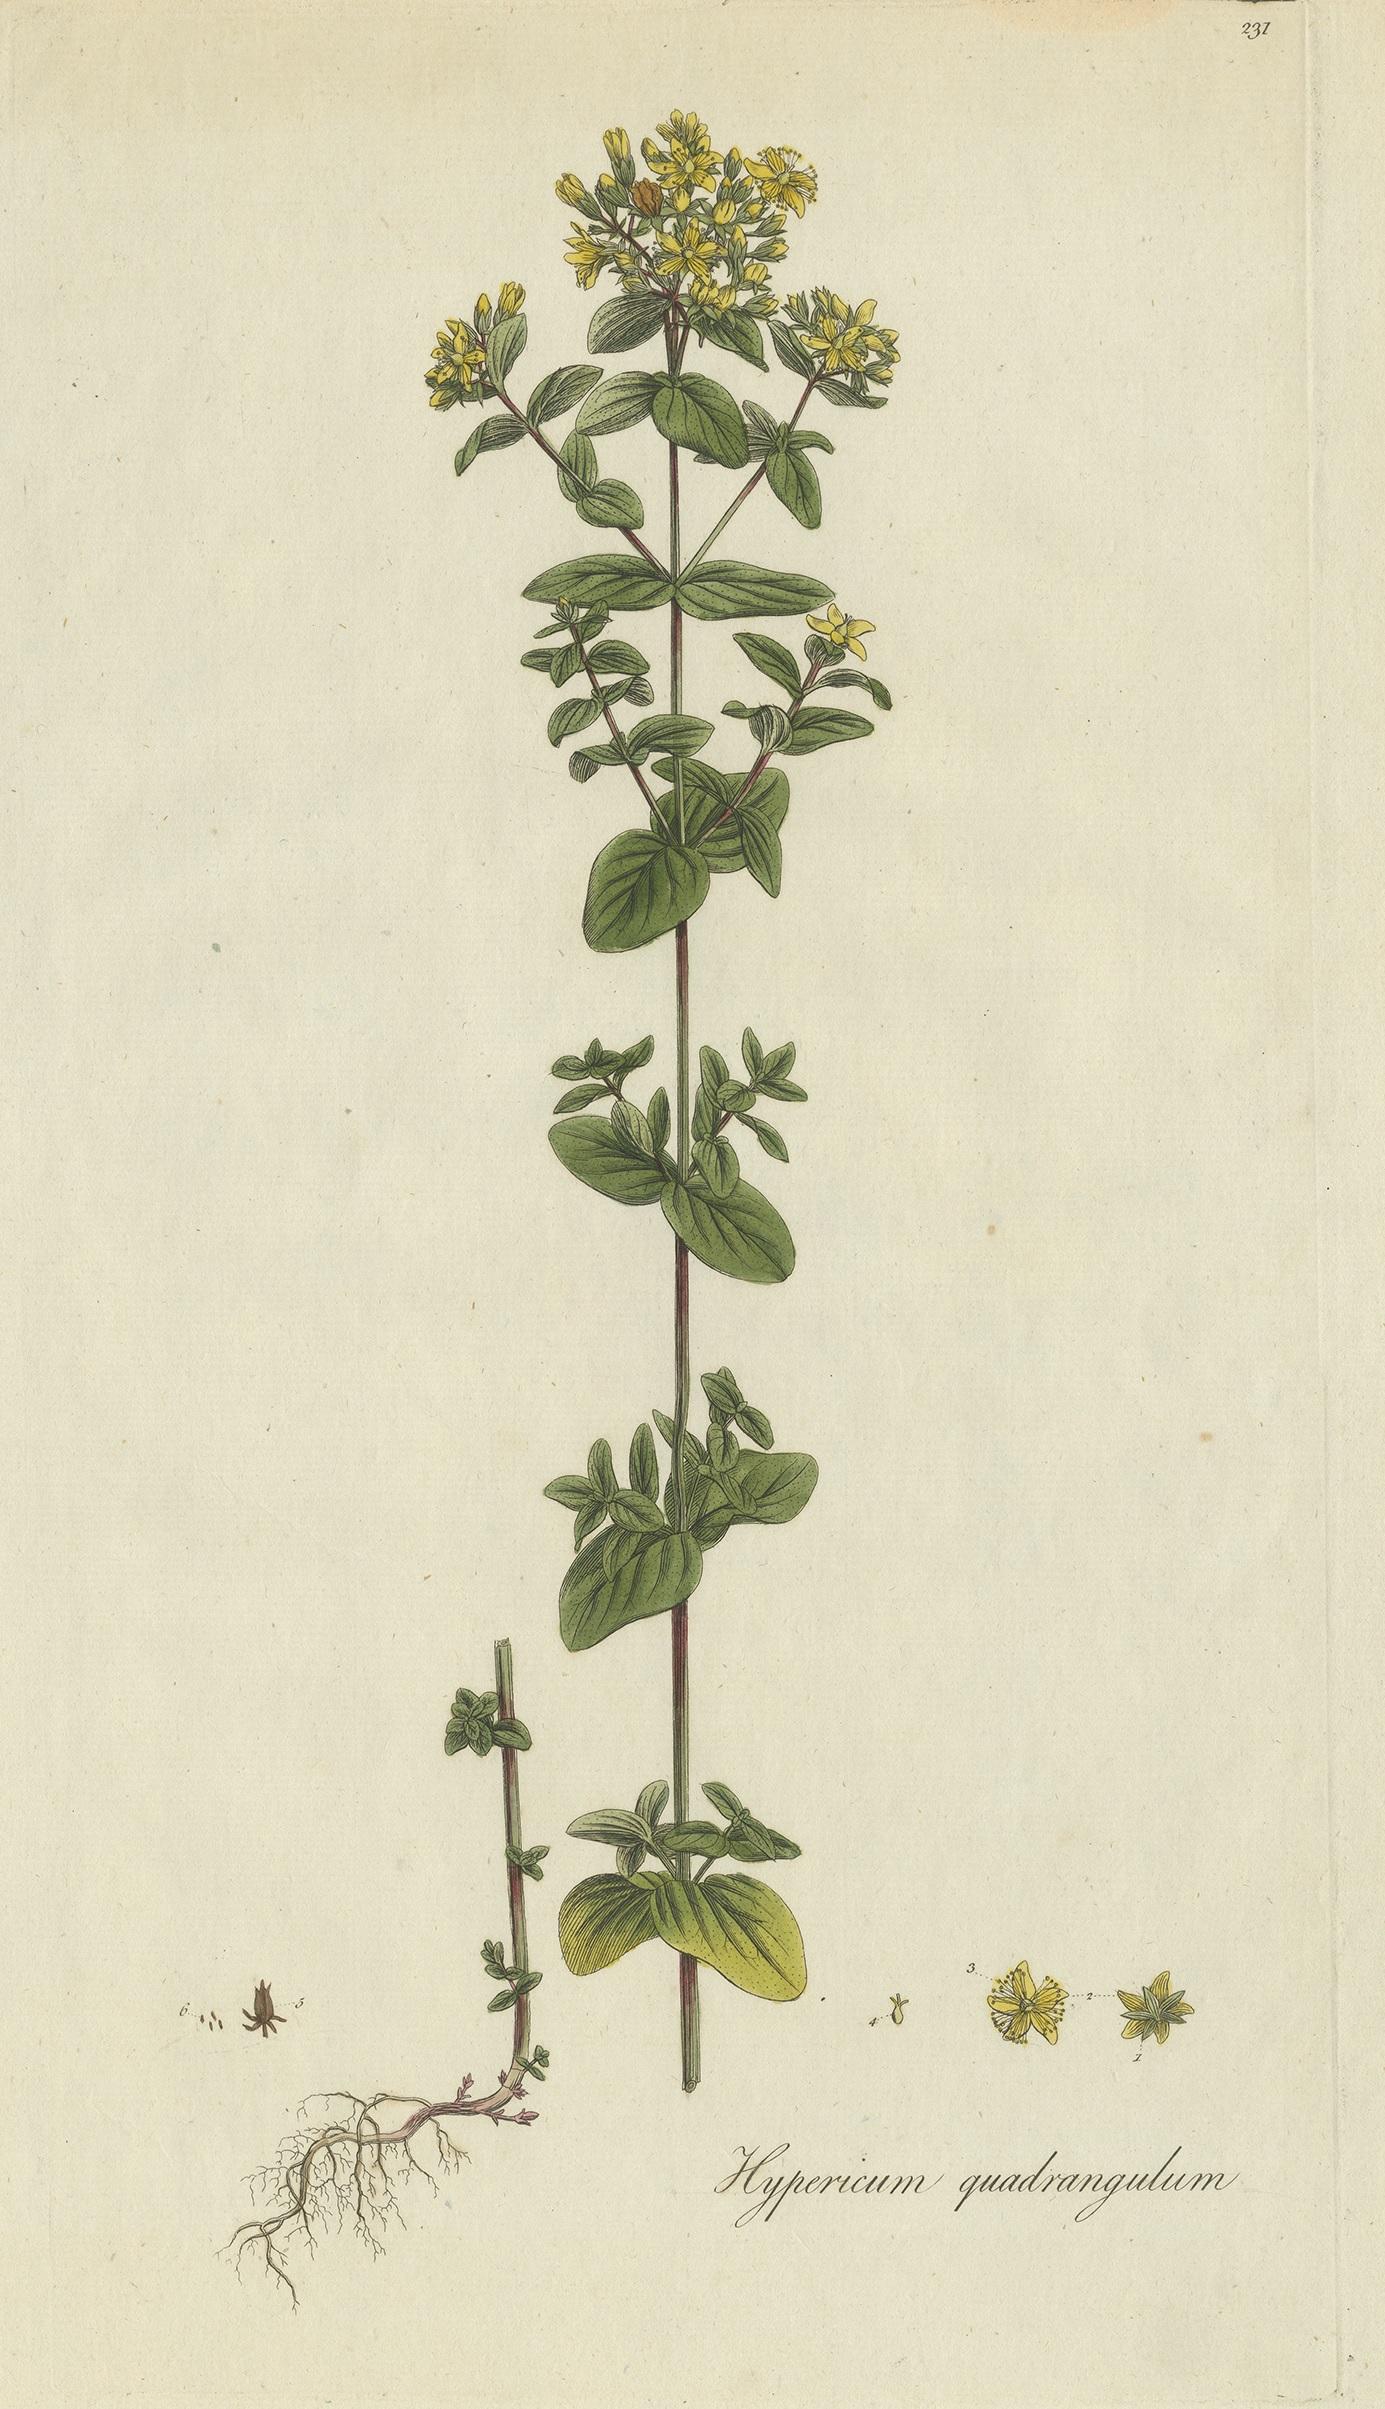 Antique botany print titled 'Hypericum Quadrangulum'. Hand colored engraving of a species of St. Johnswort. This print originates from 'Flora Londinensis' by William Curtis.